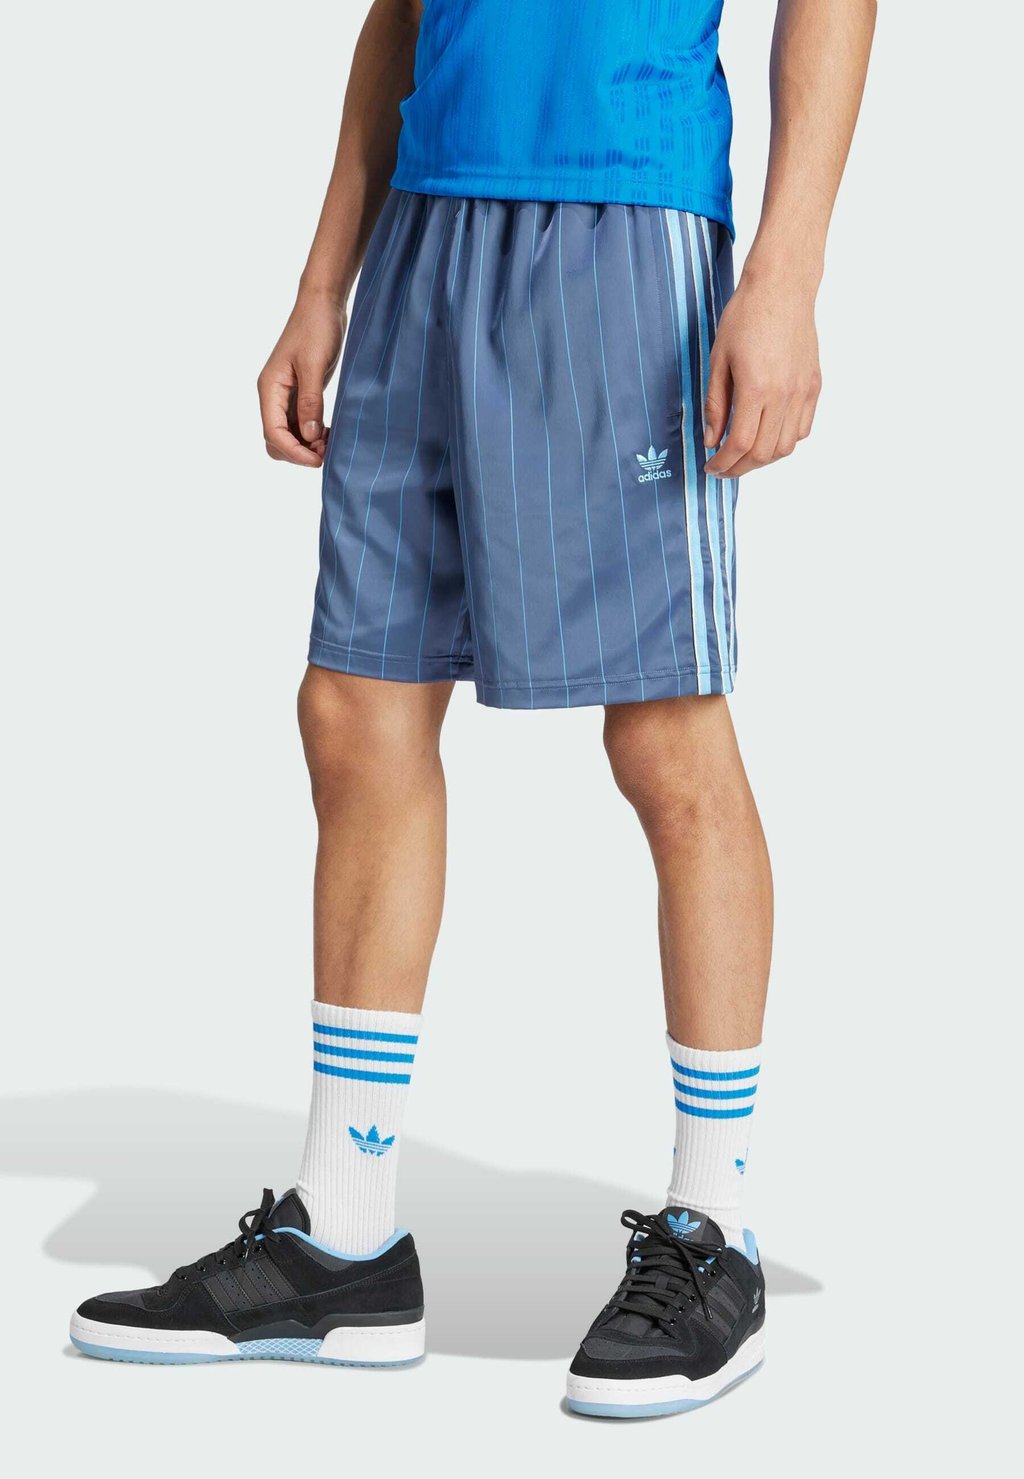 Спортивные шорты PINSTRIPE SPRINTER adidas Originals, синий